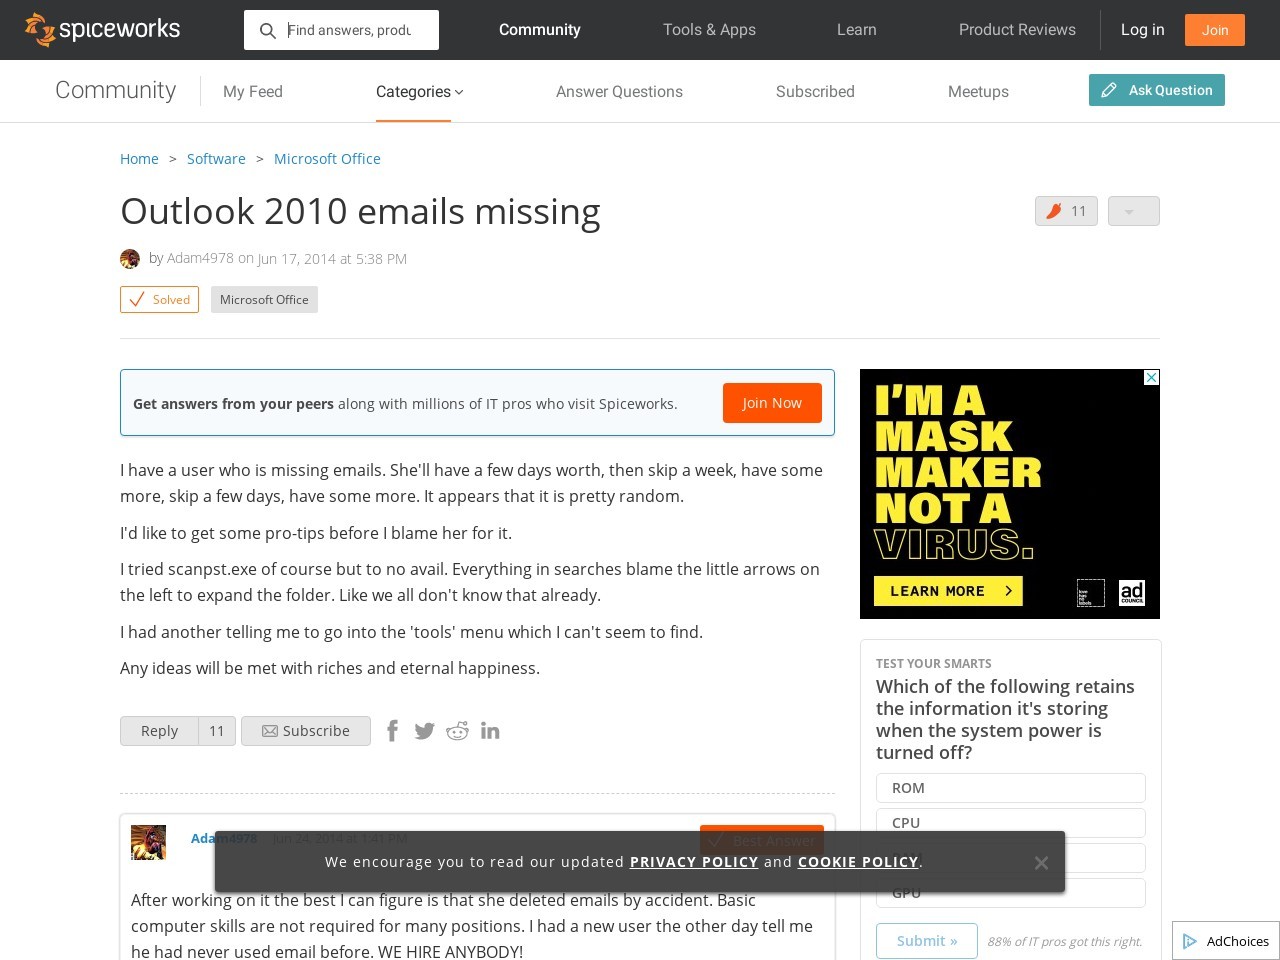 [SOLVED] Outlook 2010 emails missing